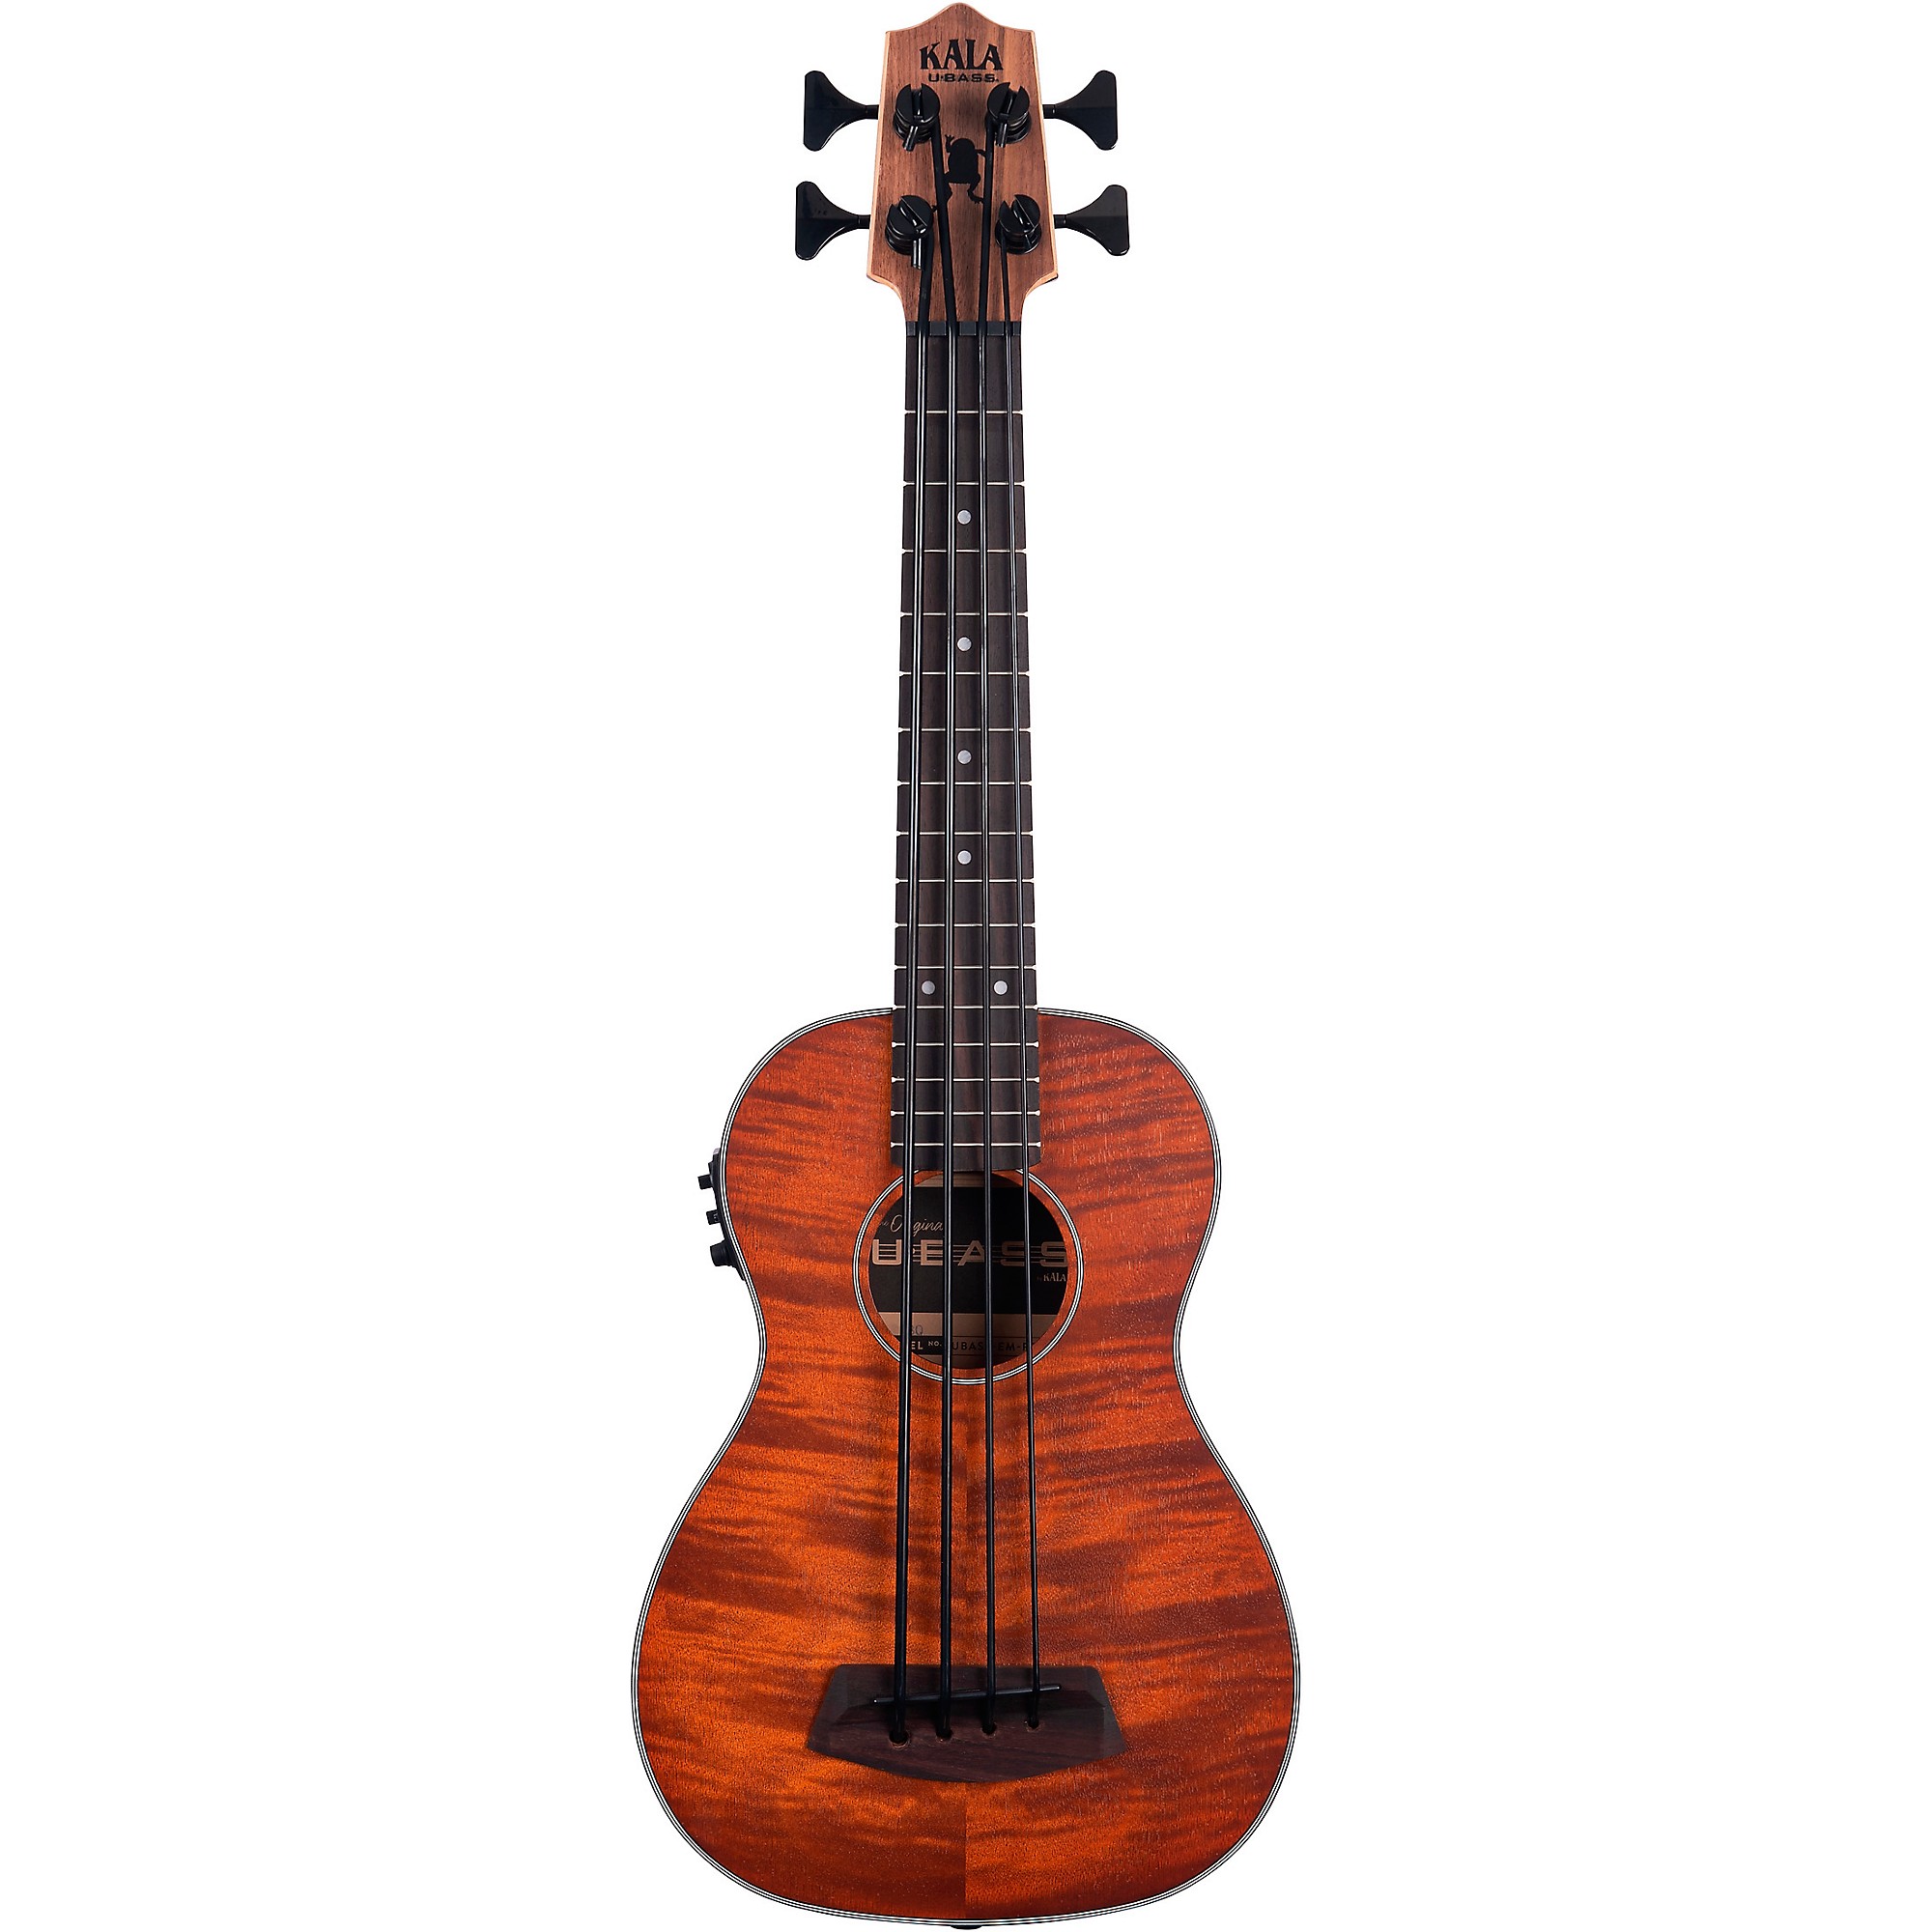 Kala Exotic Mahogany Акустически-Электрическая U-Bass Natural укулеле концерт kala ka cem kala concert exotic mahogany ukulele